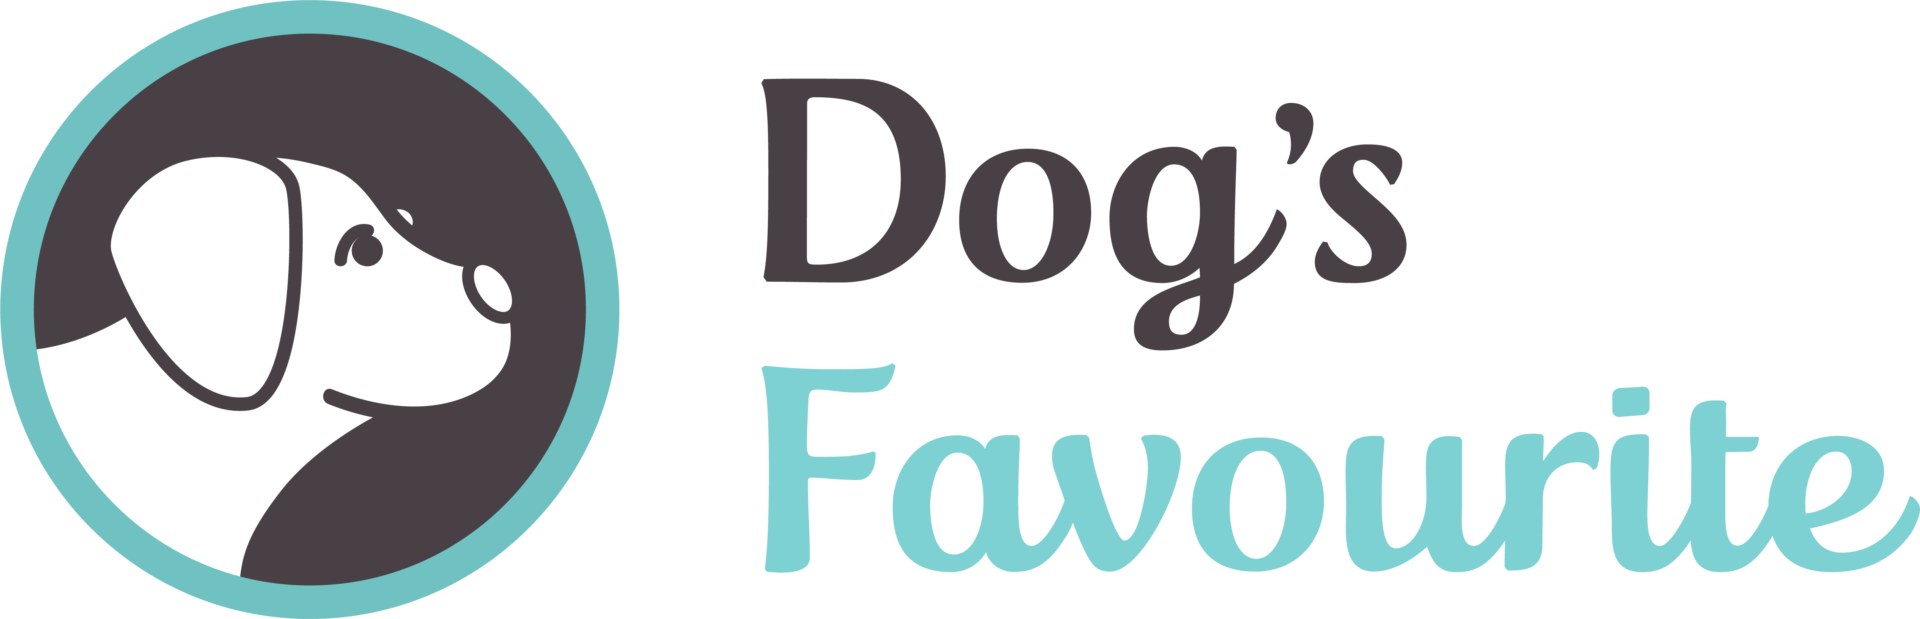 Dogs Favourite-Logo_web-1920x619